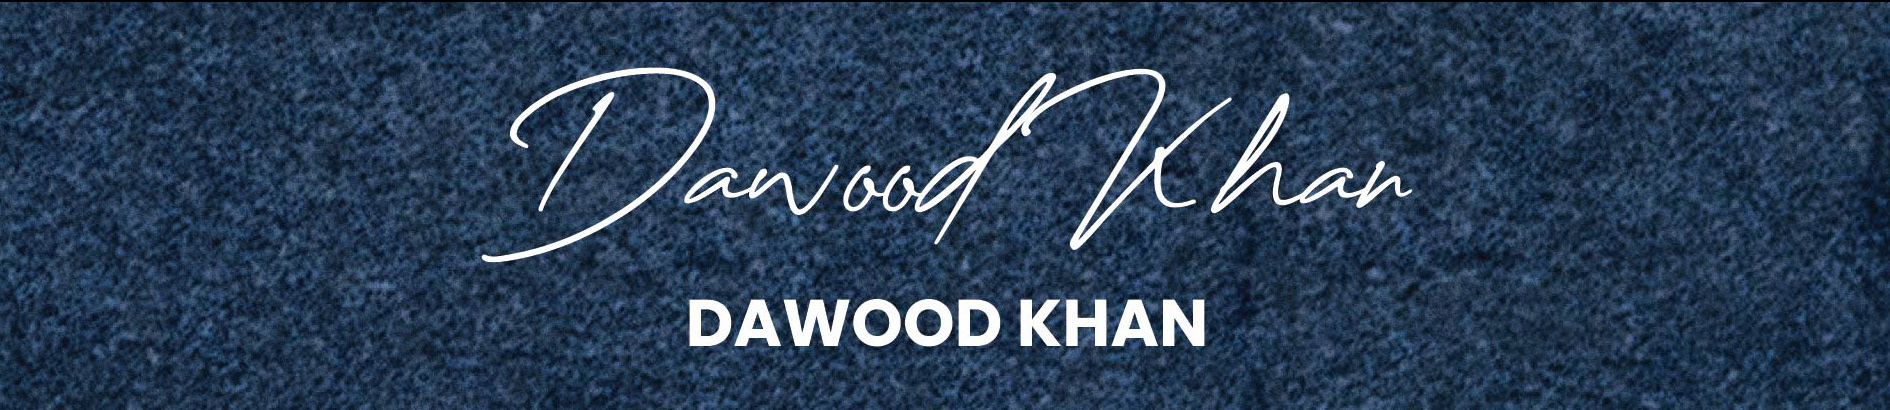 Muhammad Dawood Khan's profile banner